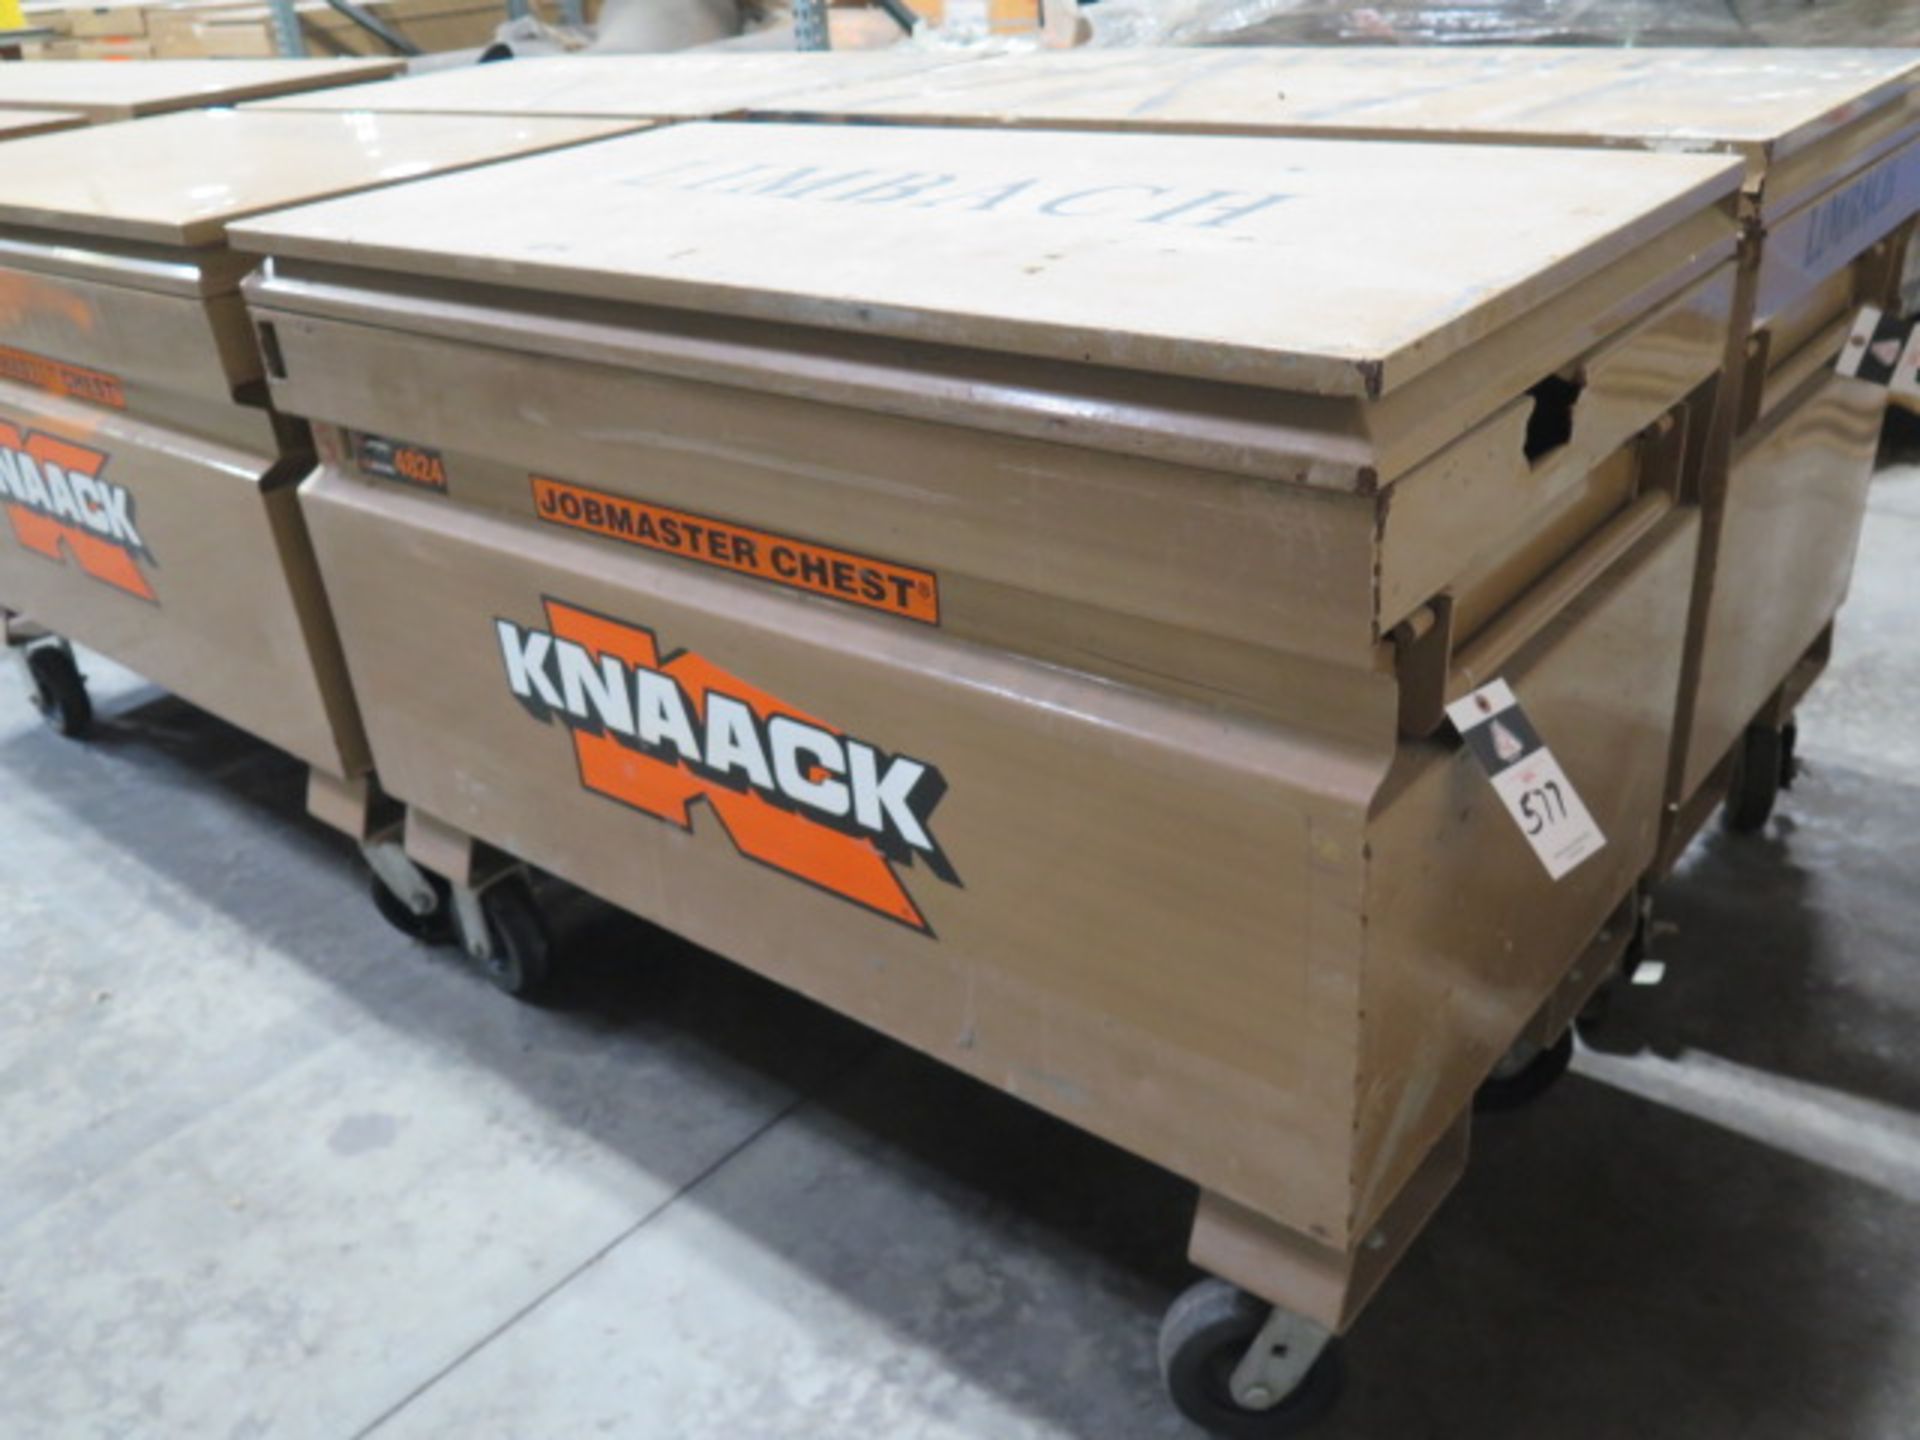 Knaack mdl. 4824 Rolling Job Box (SOLD AS-IS - NO WARRANTY) - Image 2 of 5